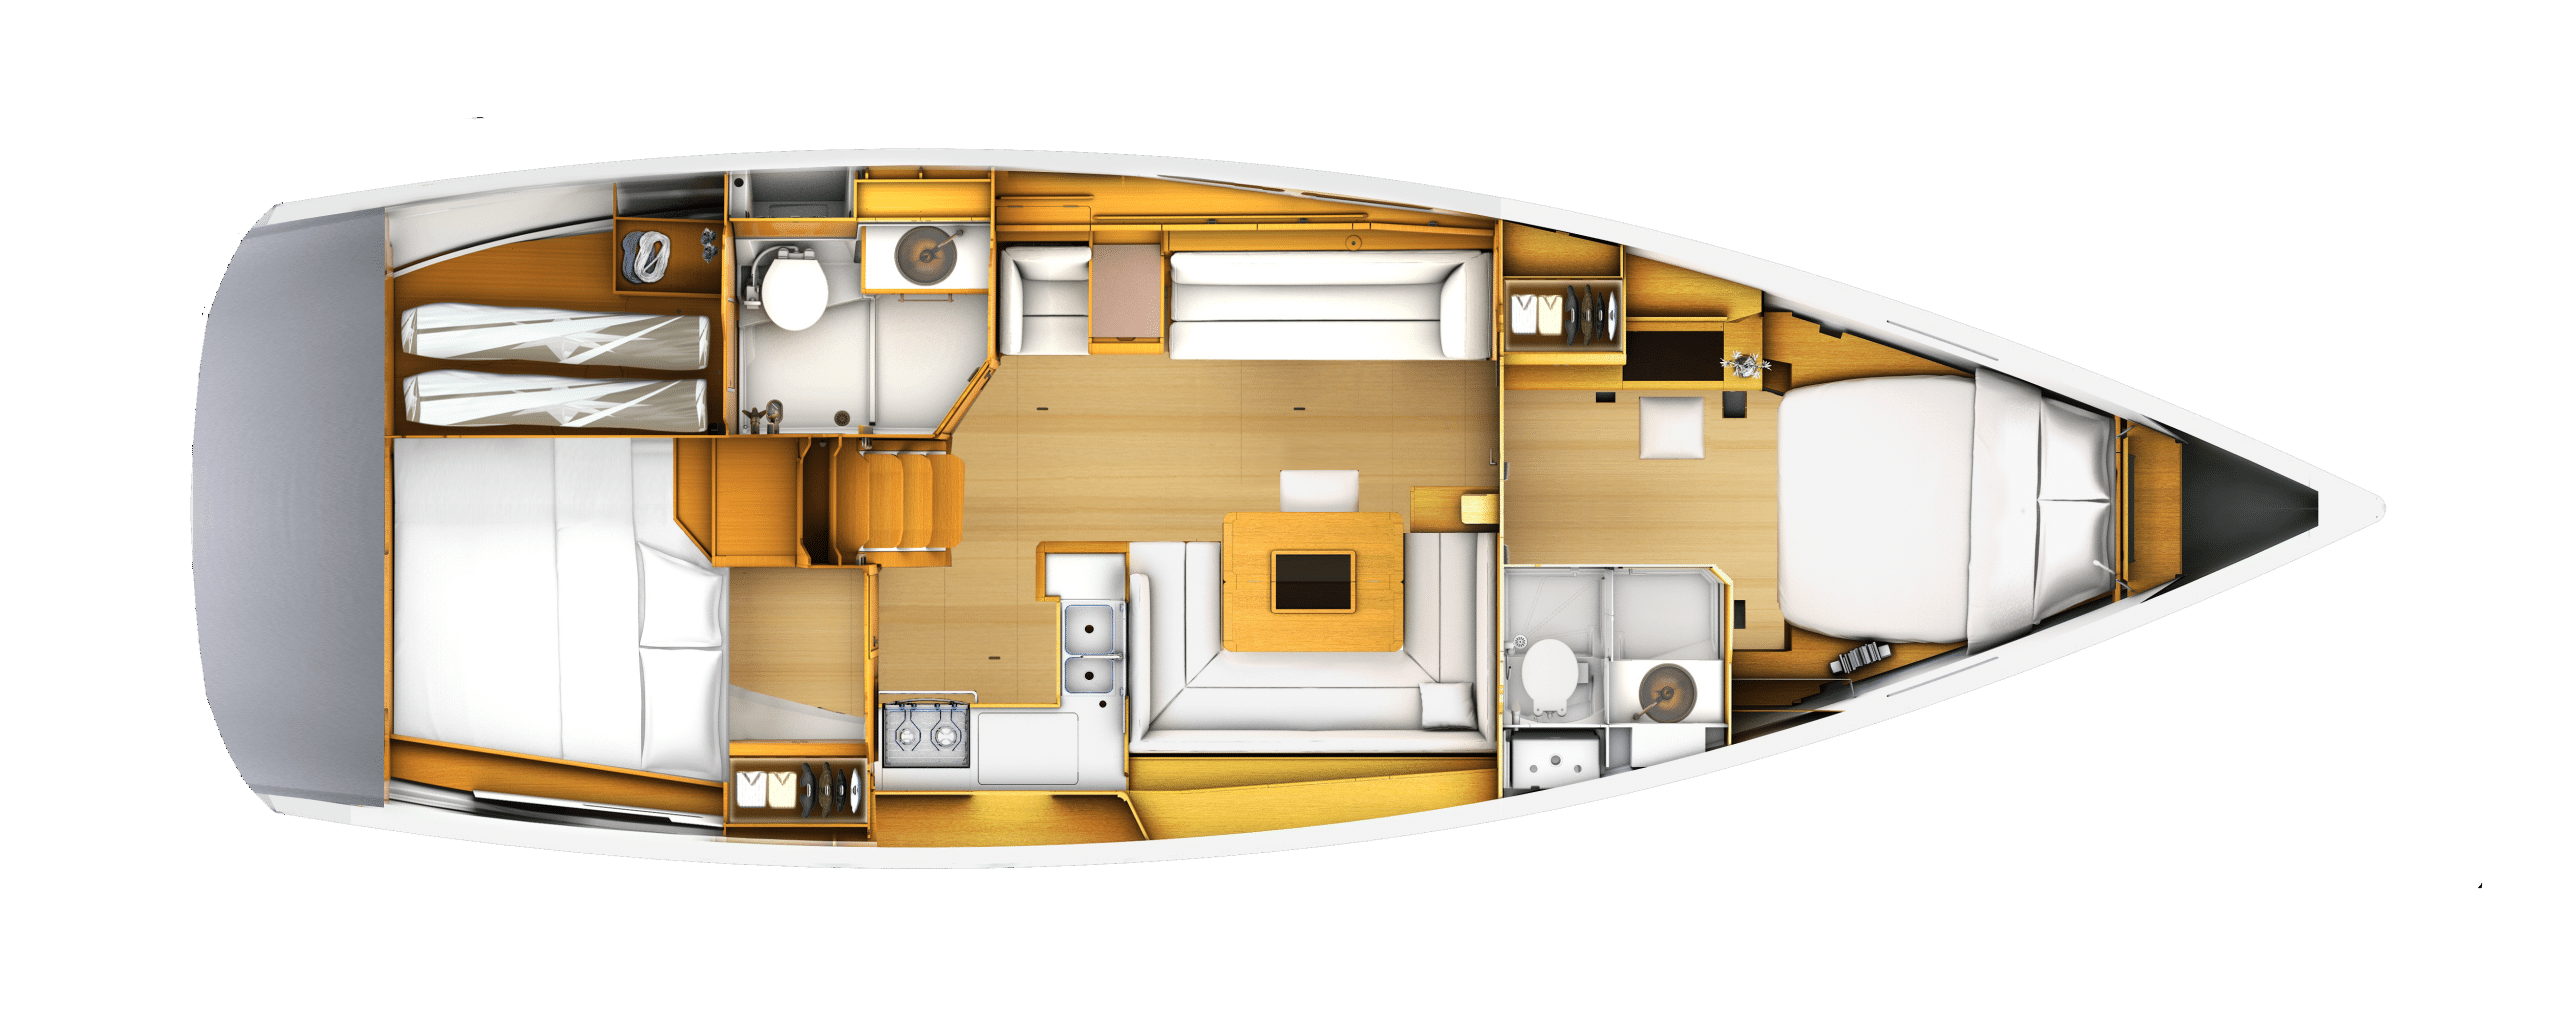 jeanneau-sun-odyssey-449-layout-2-cabins-2-heads